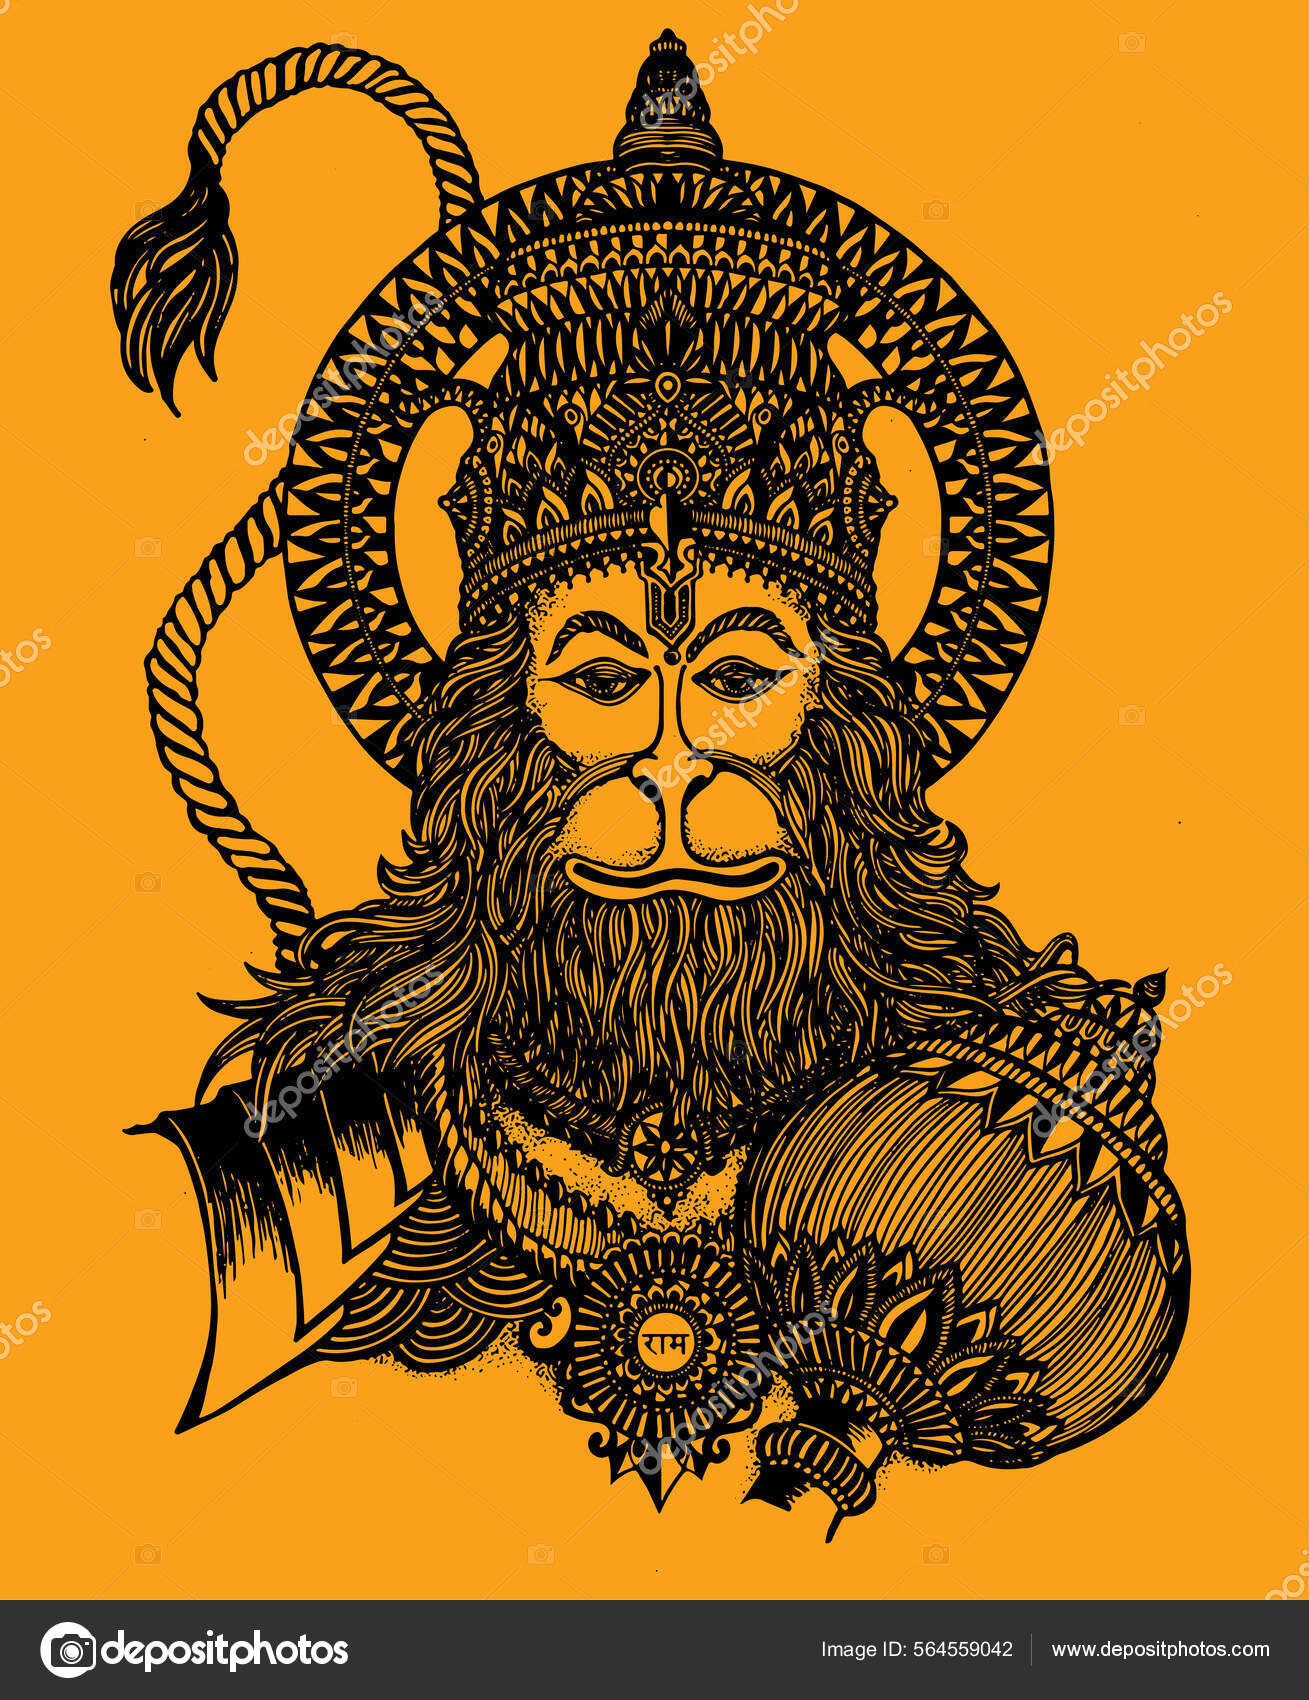 depositphotos 564559042 stock illustration drawing sketch hindu god lord